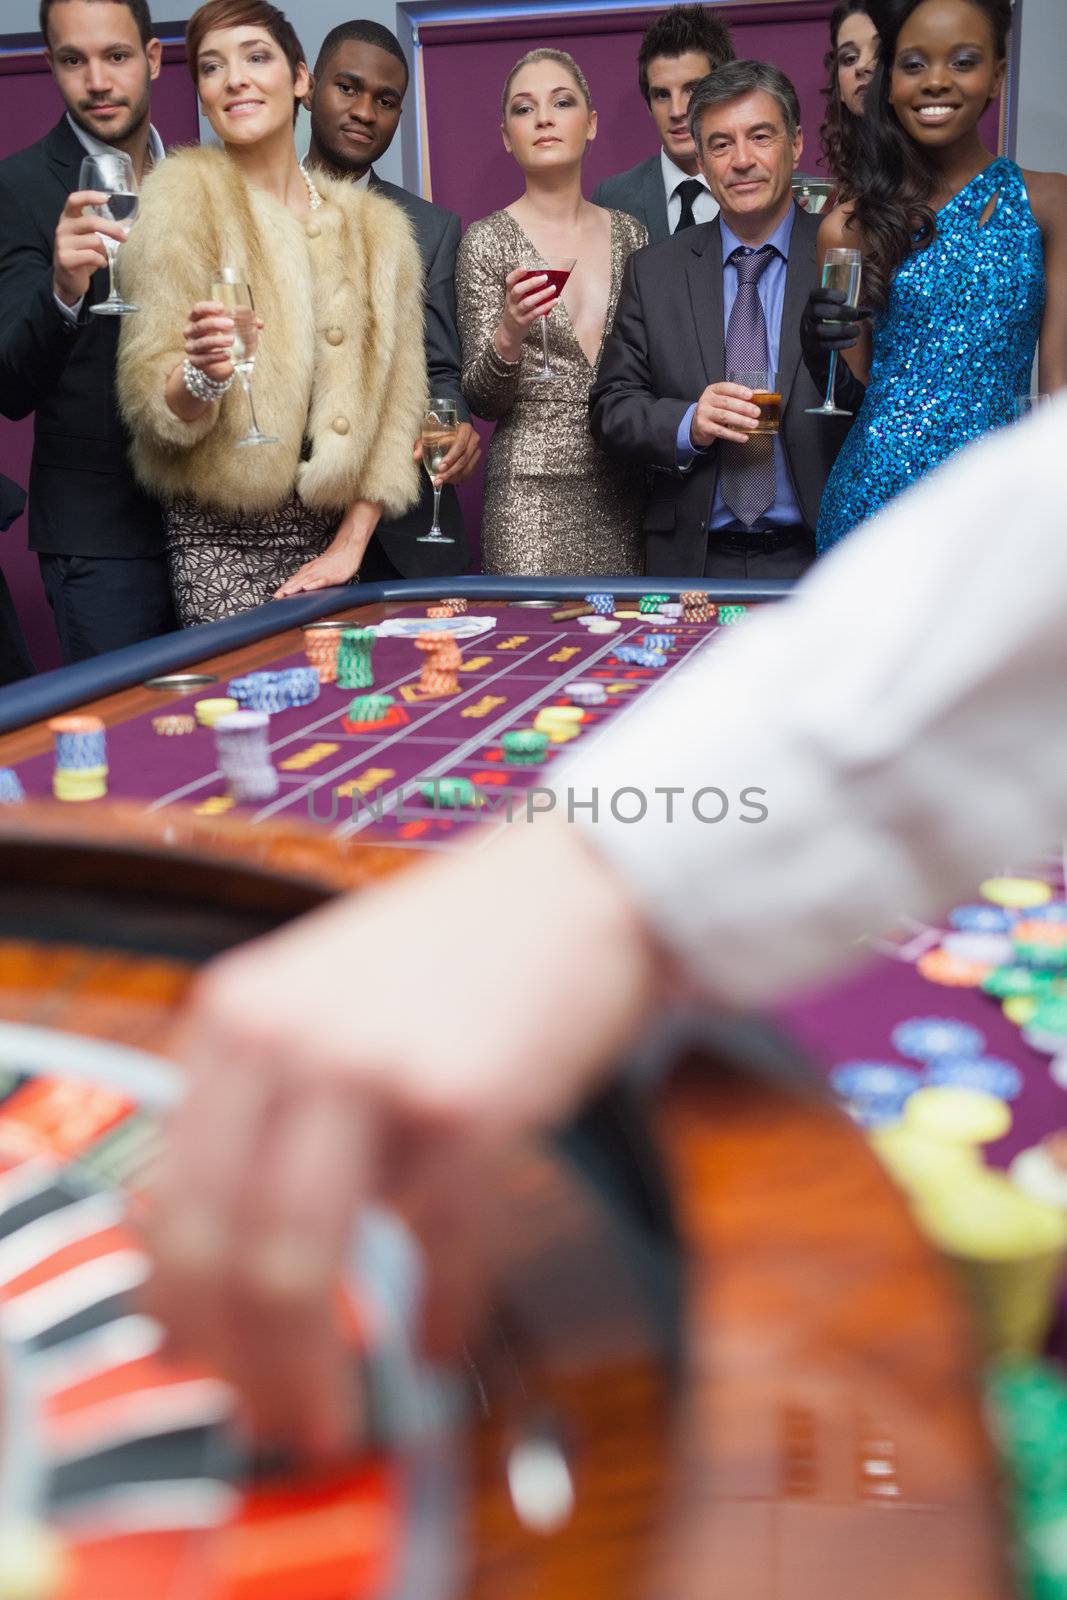 People looking at the roulette wheel by Wavebreakmedia